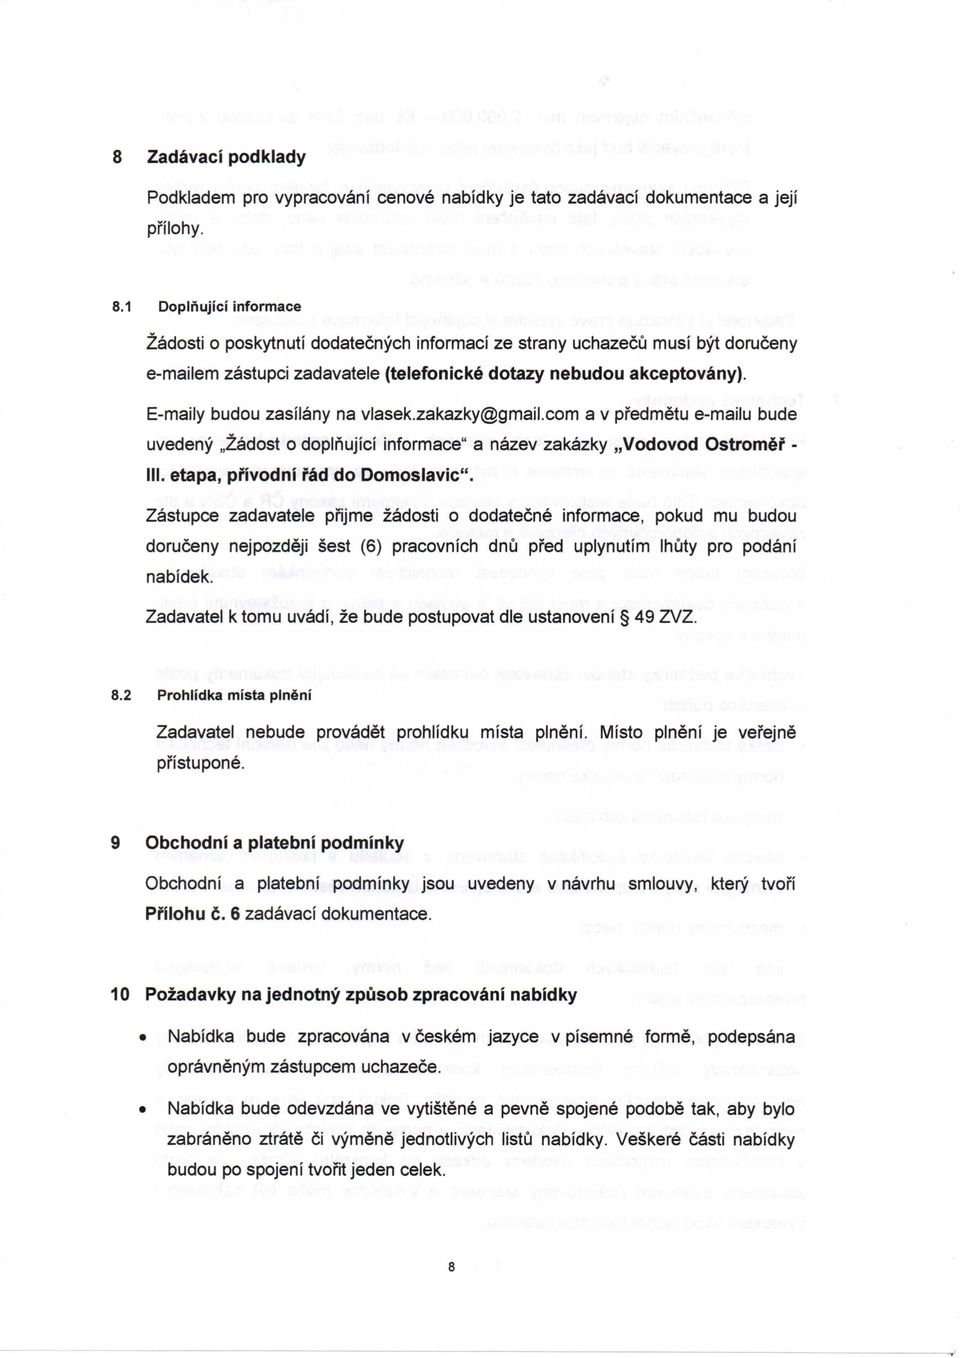 vlasek.zakazky@gmail.com a v pfedmetu e-mailu bude uvedeny Zadost o doplnujici informace" a nazev zakazky Vodovod Ostromef - III. etapa, pfivodni fad do Domoslavic".